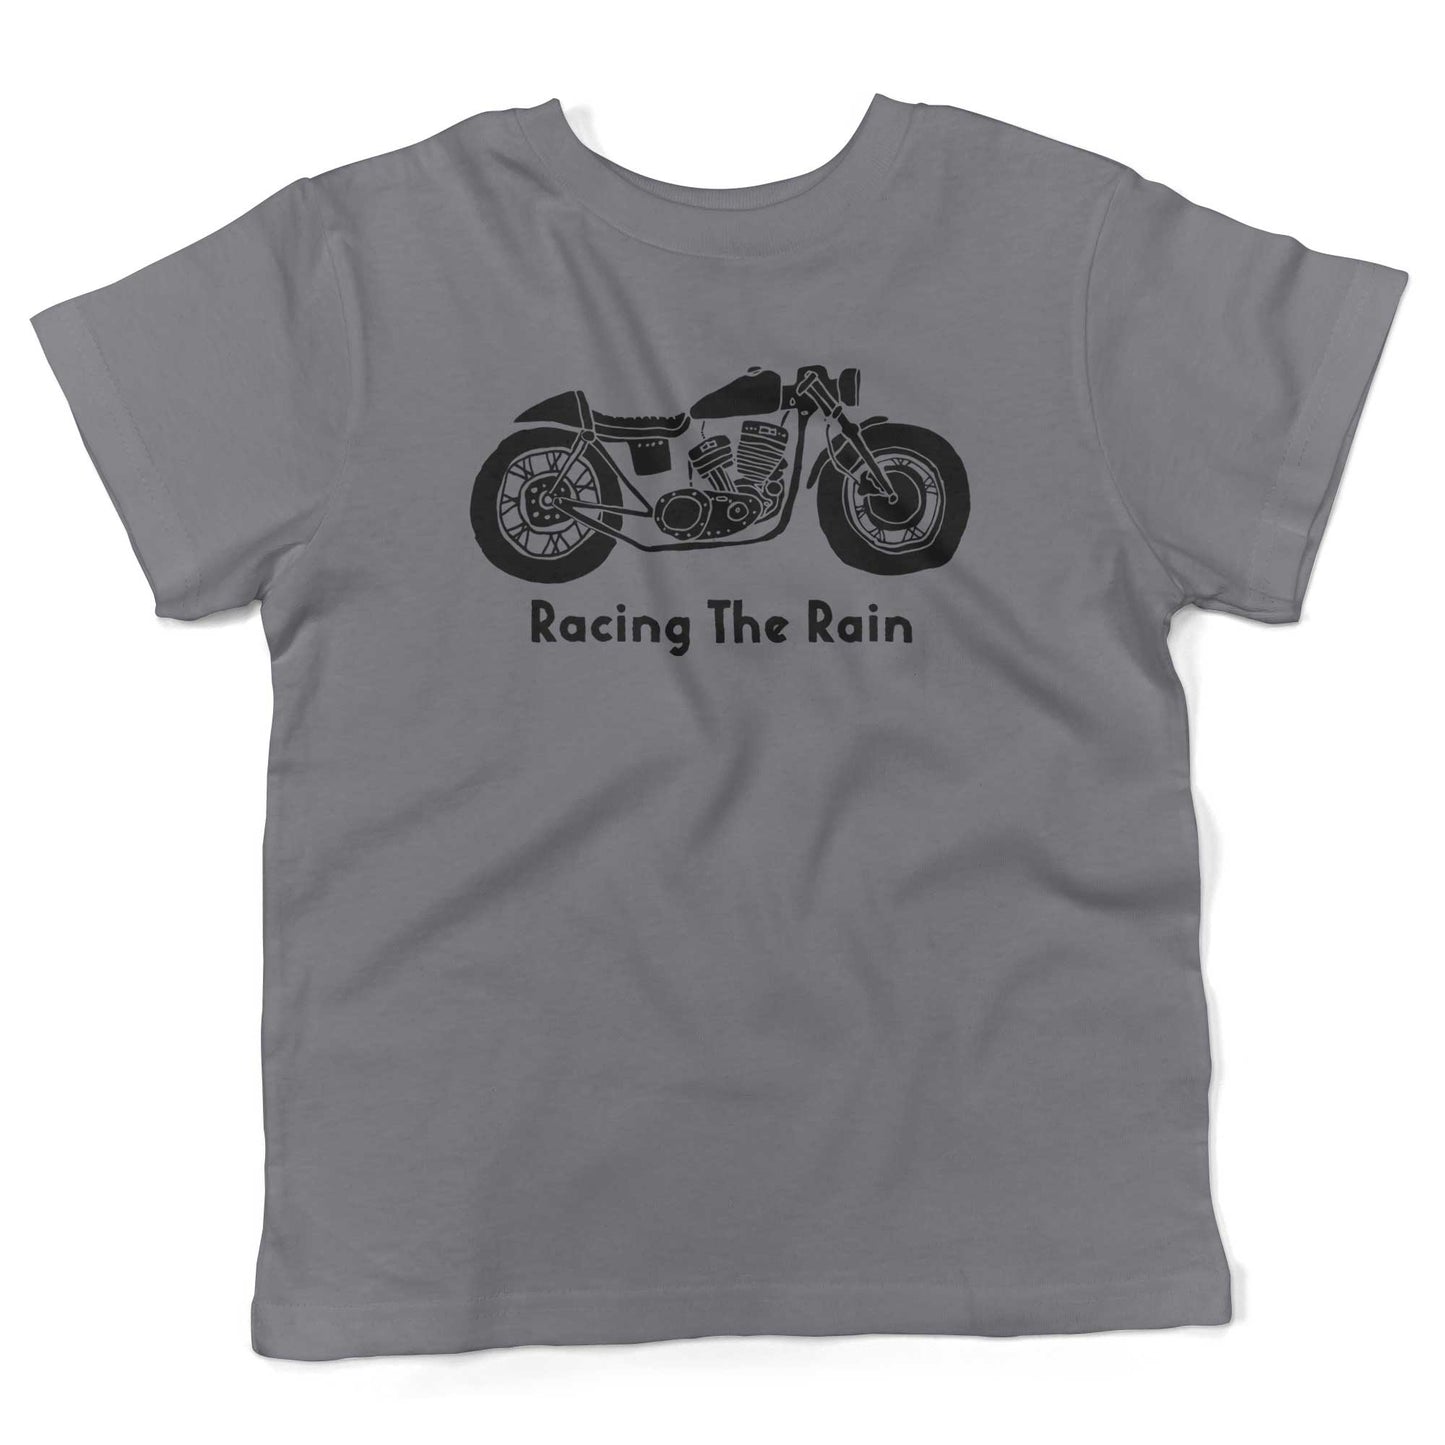 Racing The Rain Toddler Shirt-Slate-2T